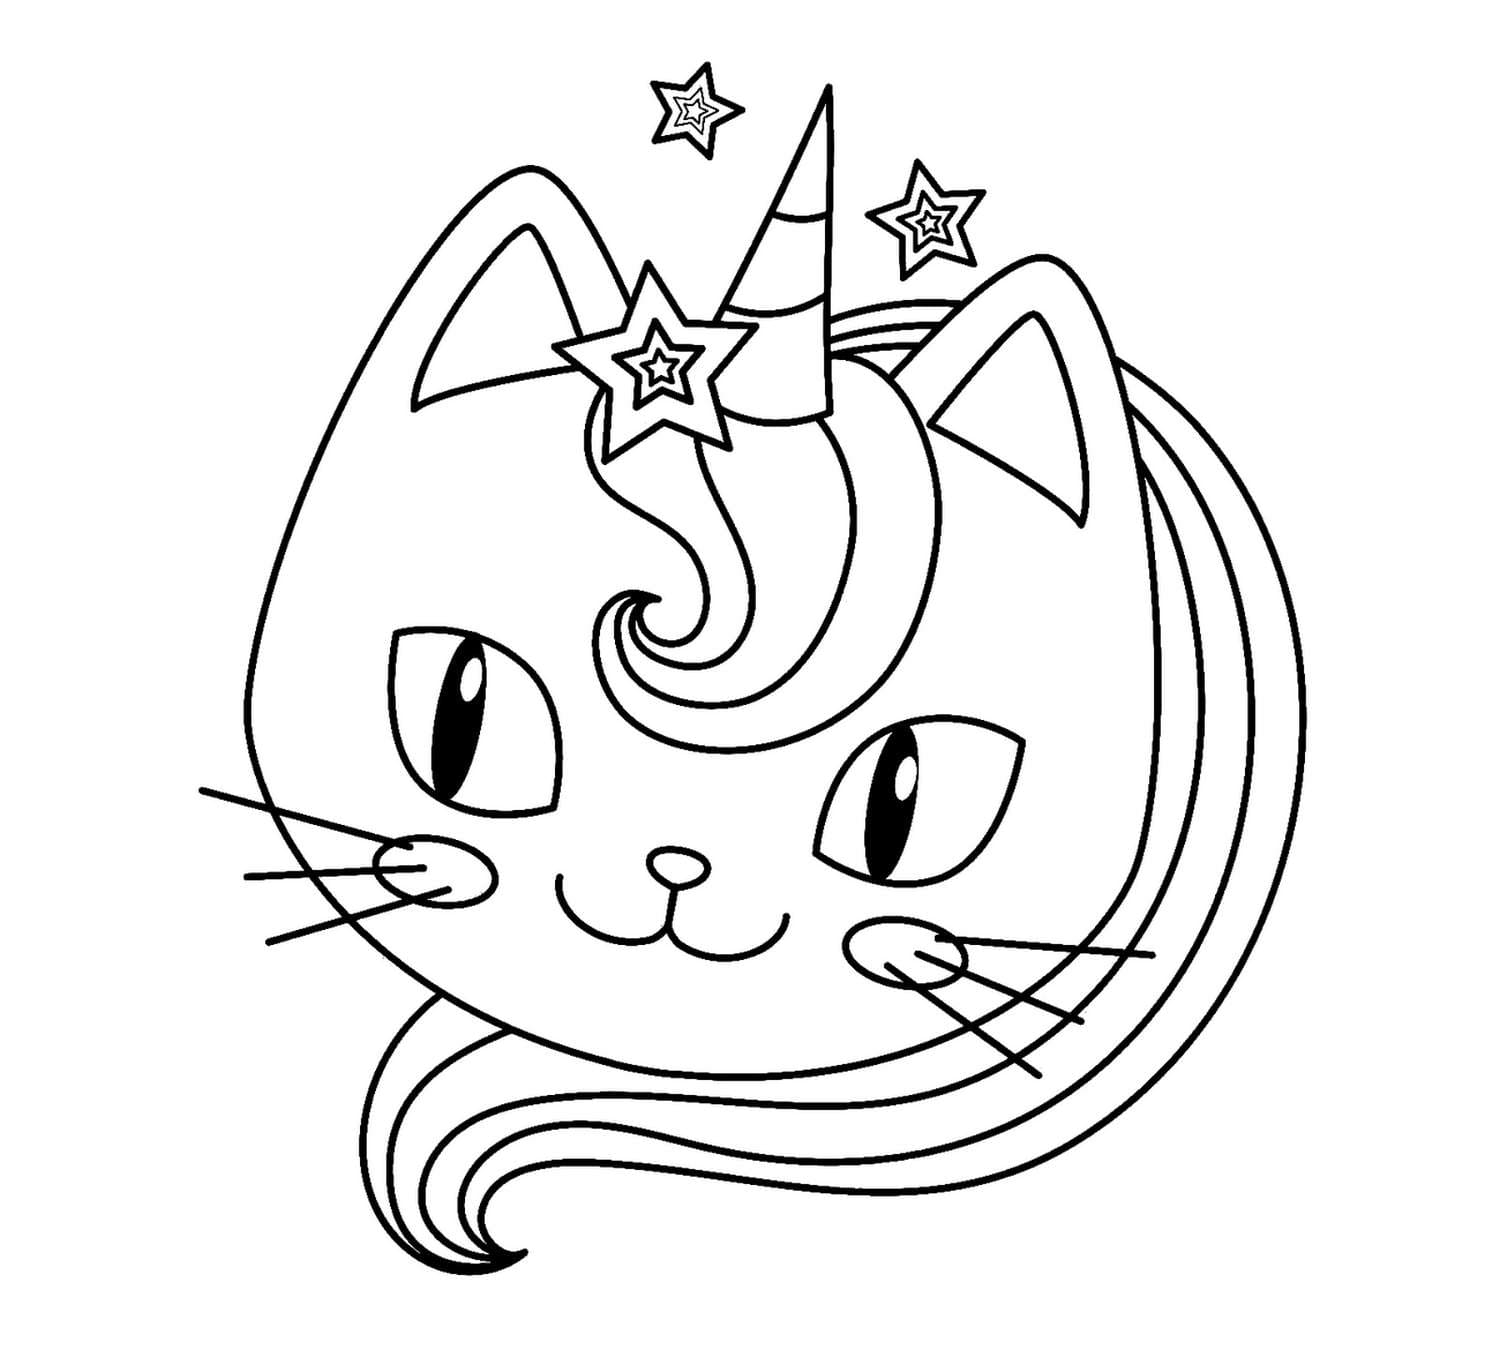 Para Colorear Gato-Unicornio Cara bonita